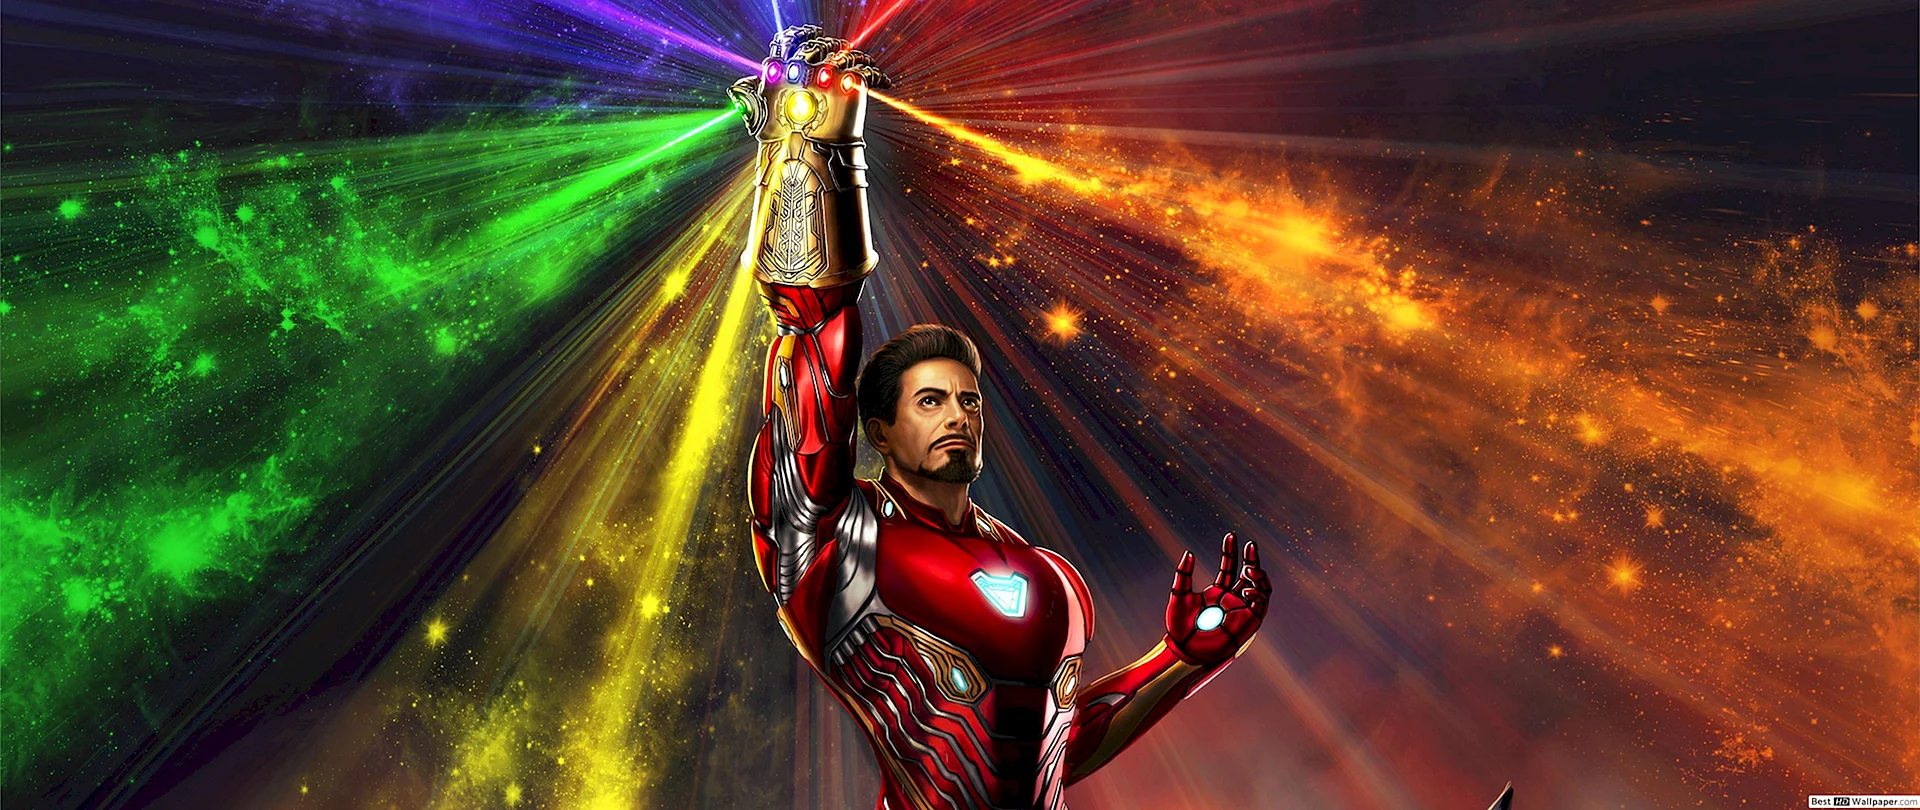 Iron Man Iron Gauntlet Endgame Wallpaper